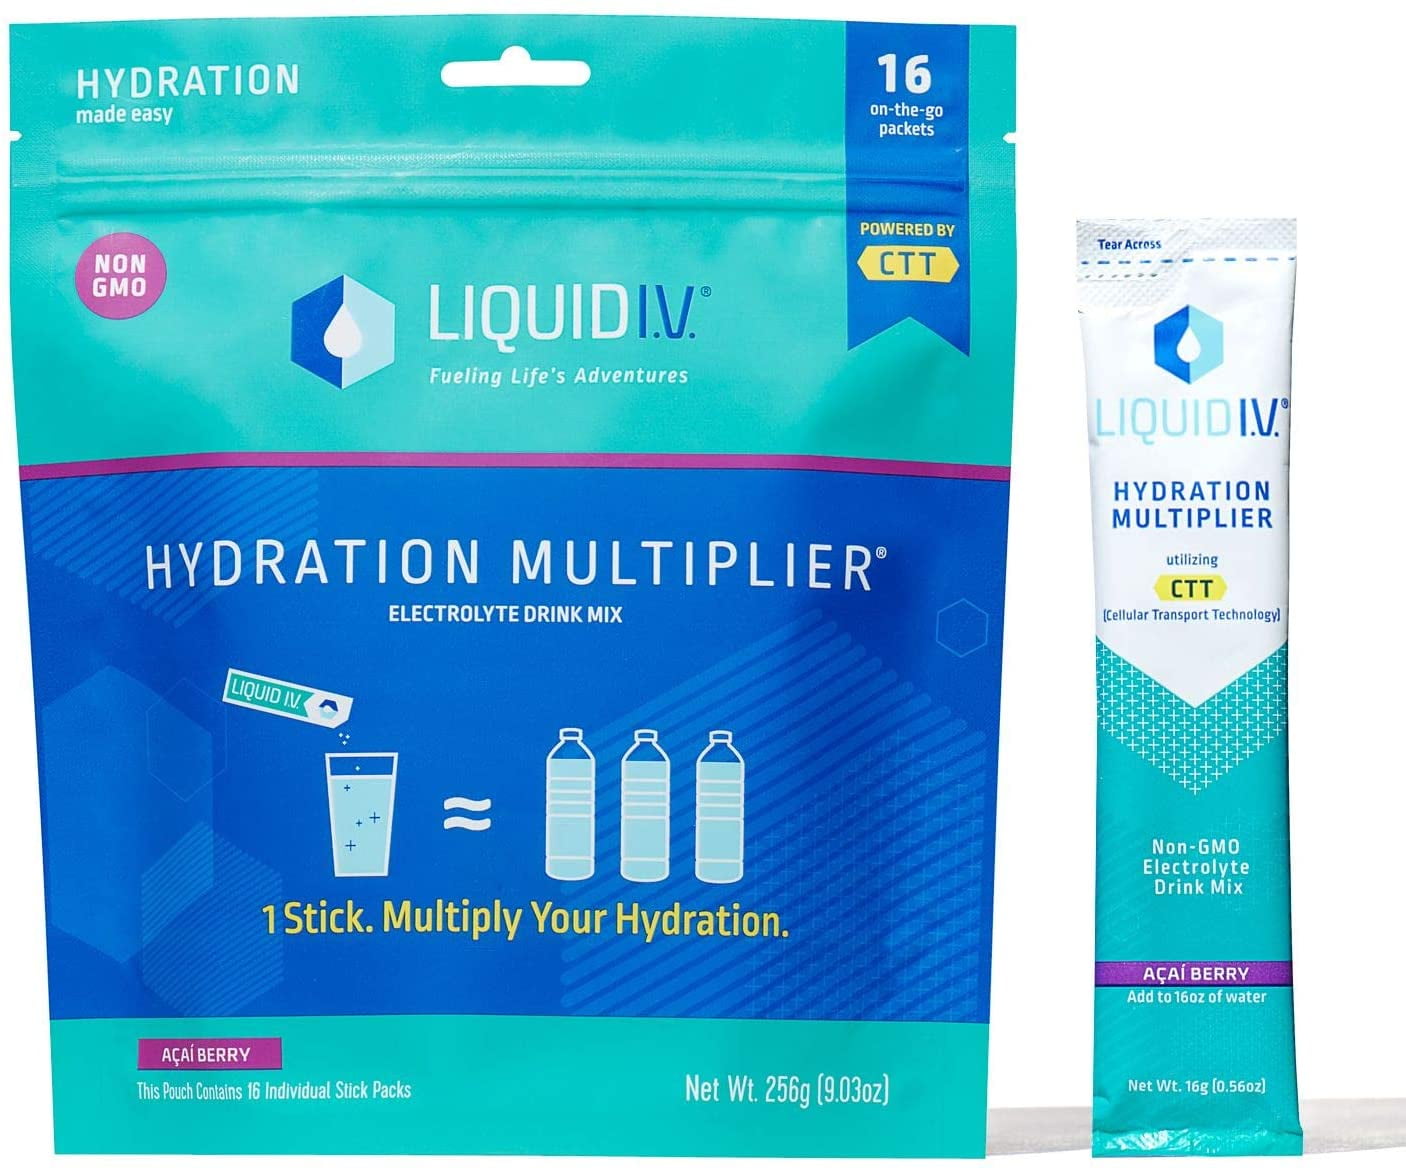 Liquid I.V. hyadration multiplier electrolyte drink mix seaberry 16-packs.